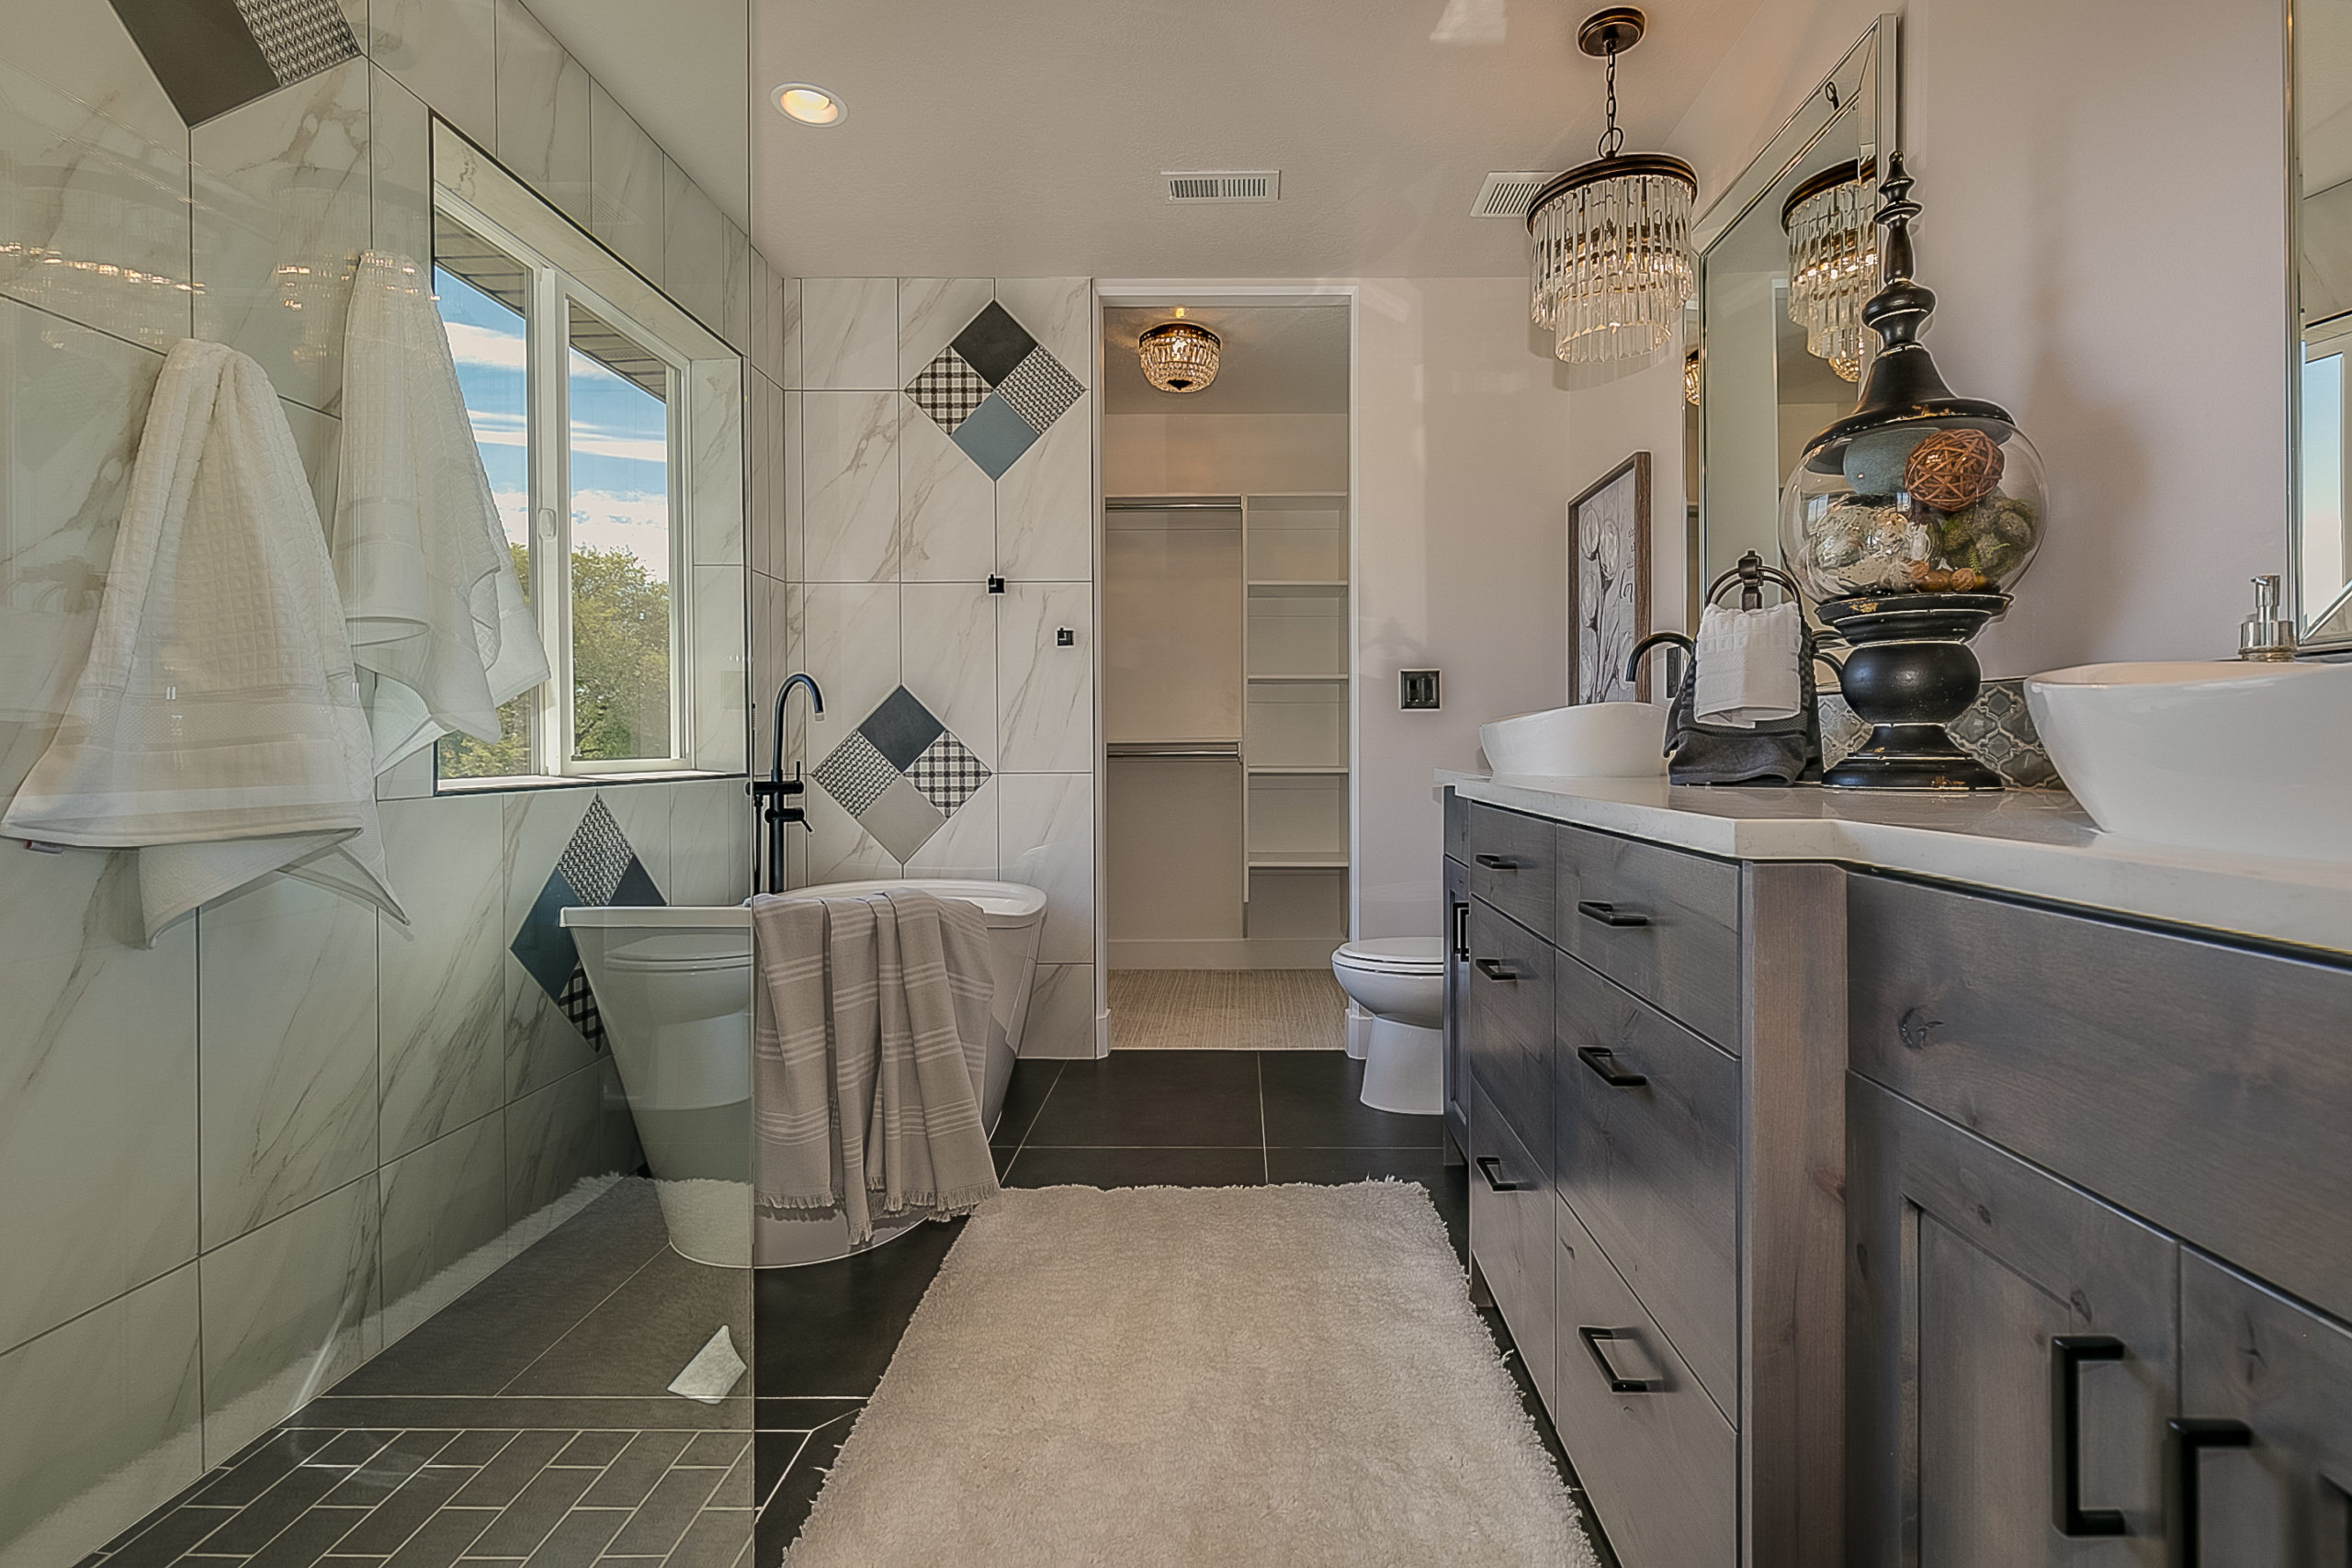 Double vessel sinks add trendy design to upscale bathroom